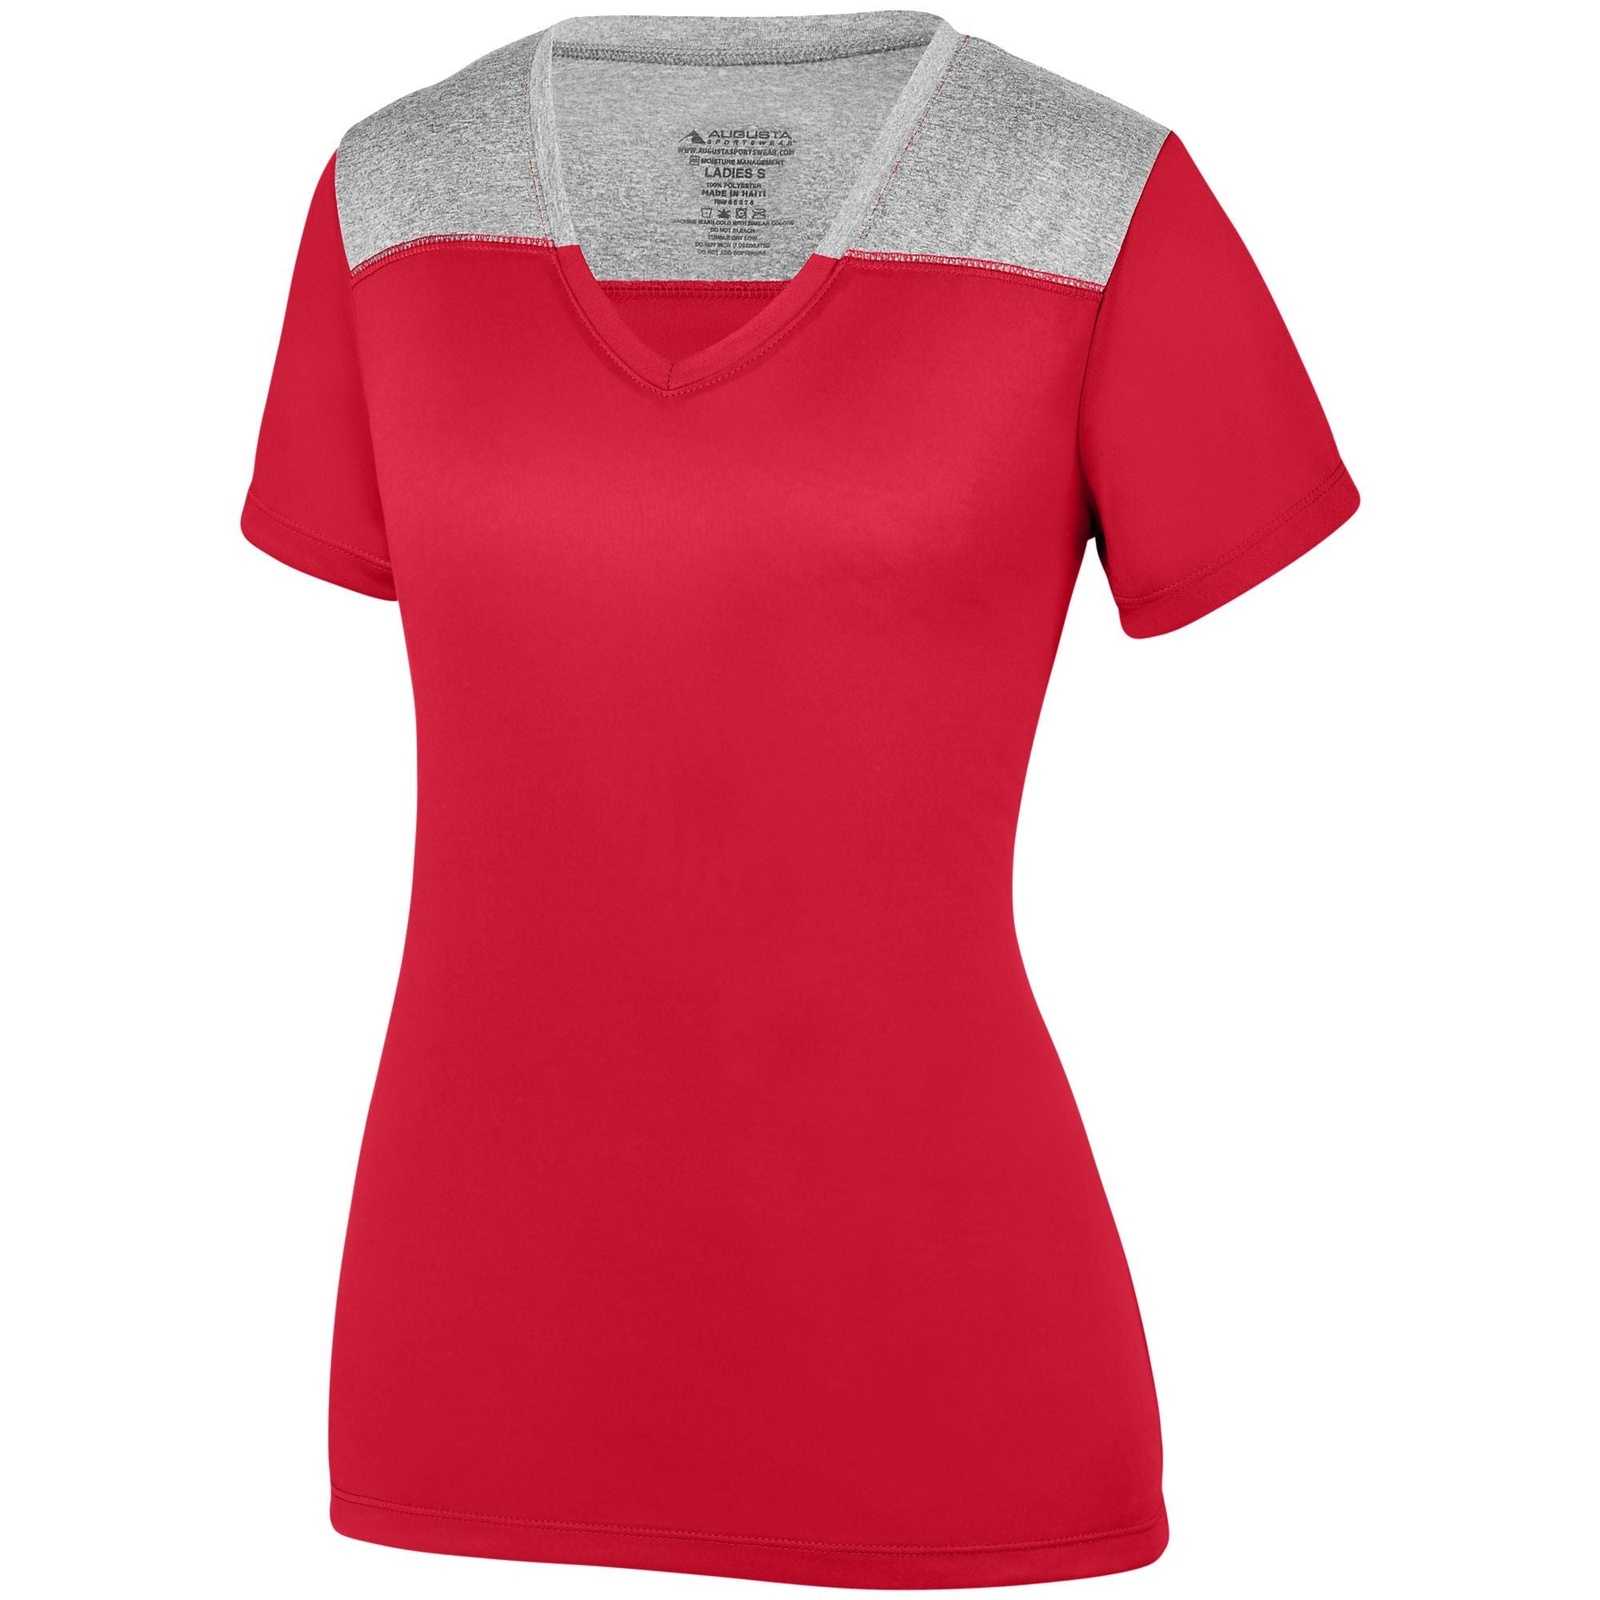 Augusta 3057 Ladies Challenge T-Shirt - Red Graphite Heather - HIT a Double